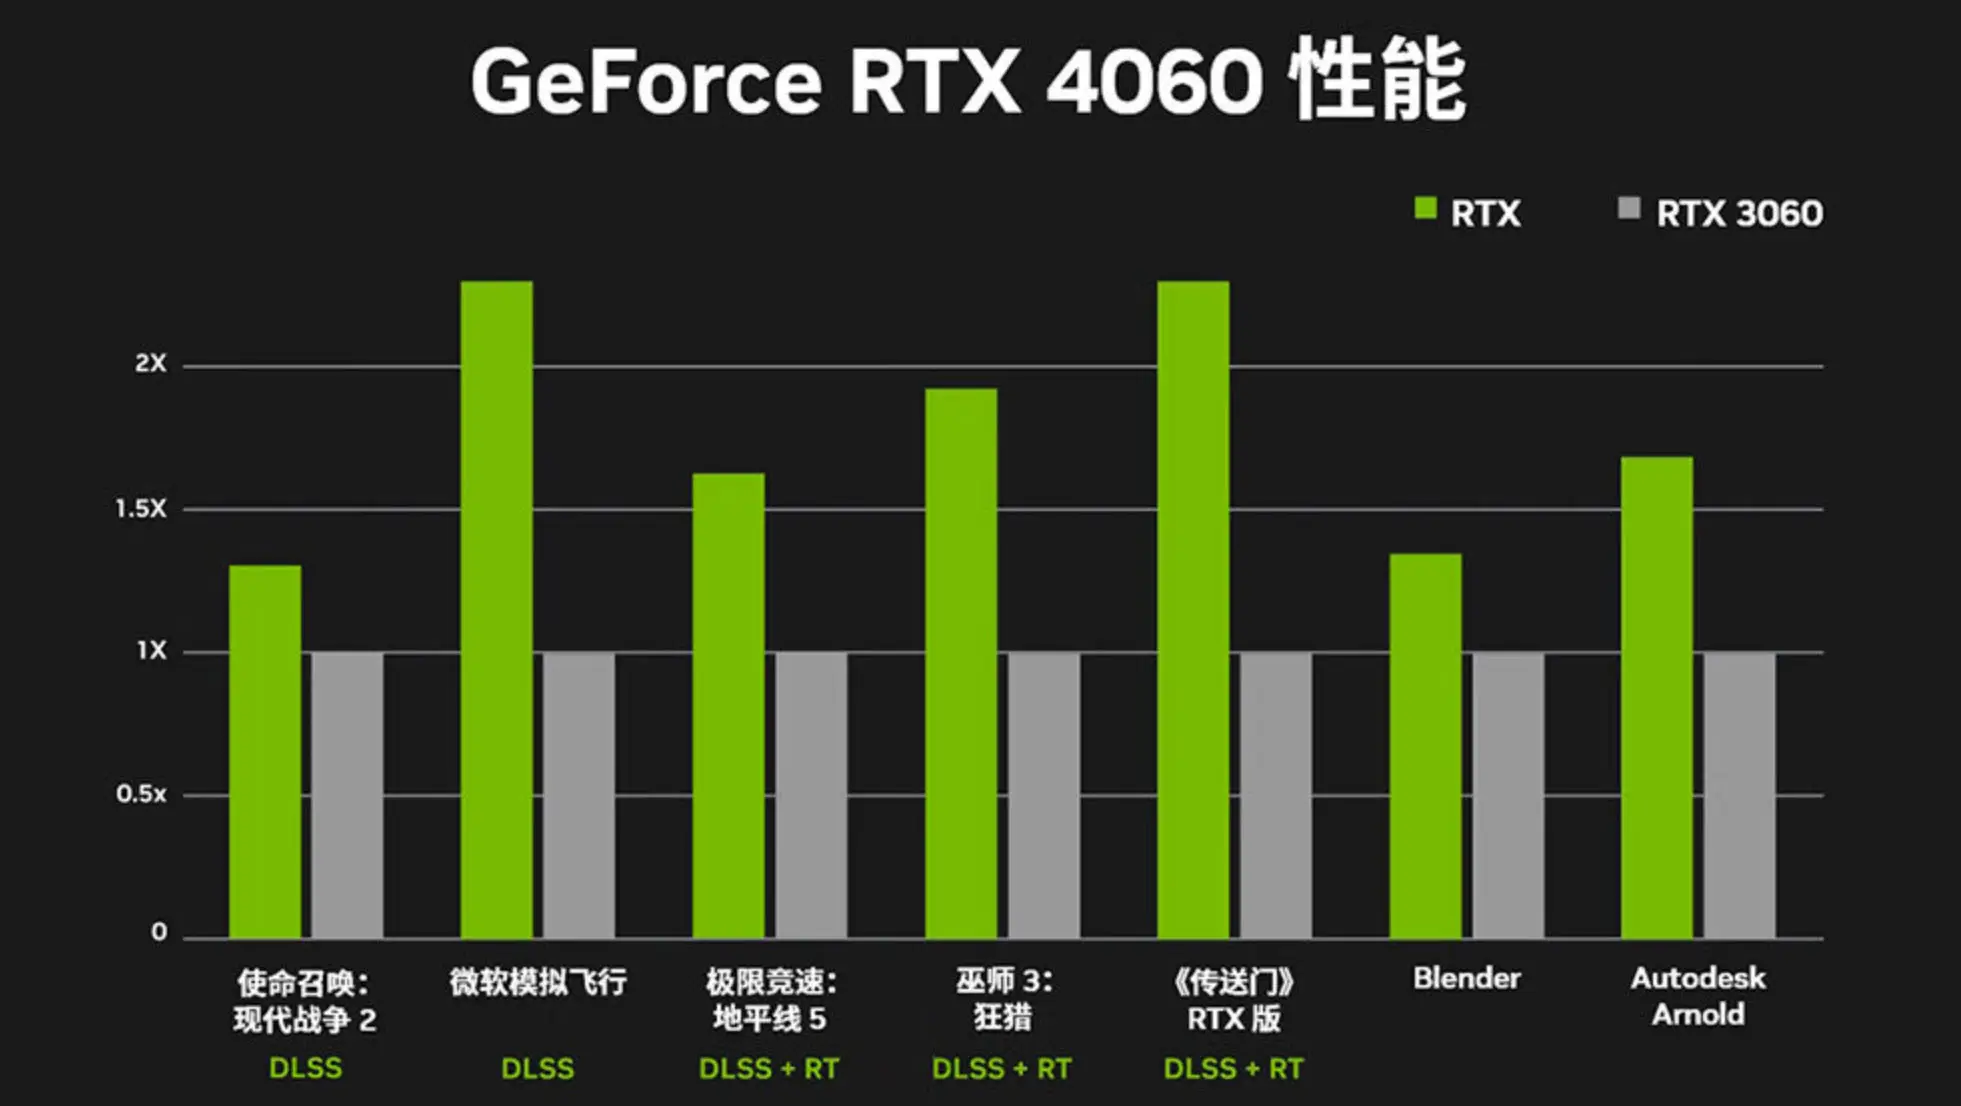 HD4830 vs GT730：性能对比，惊现巨大差异  第1张